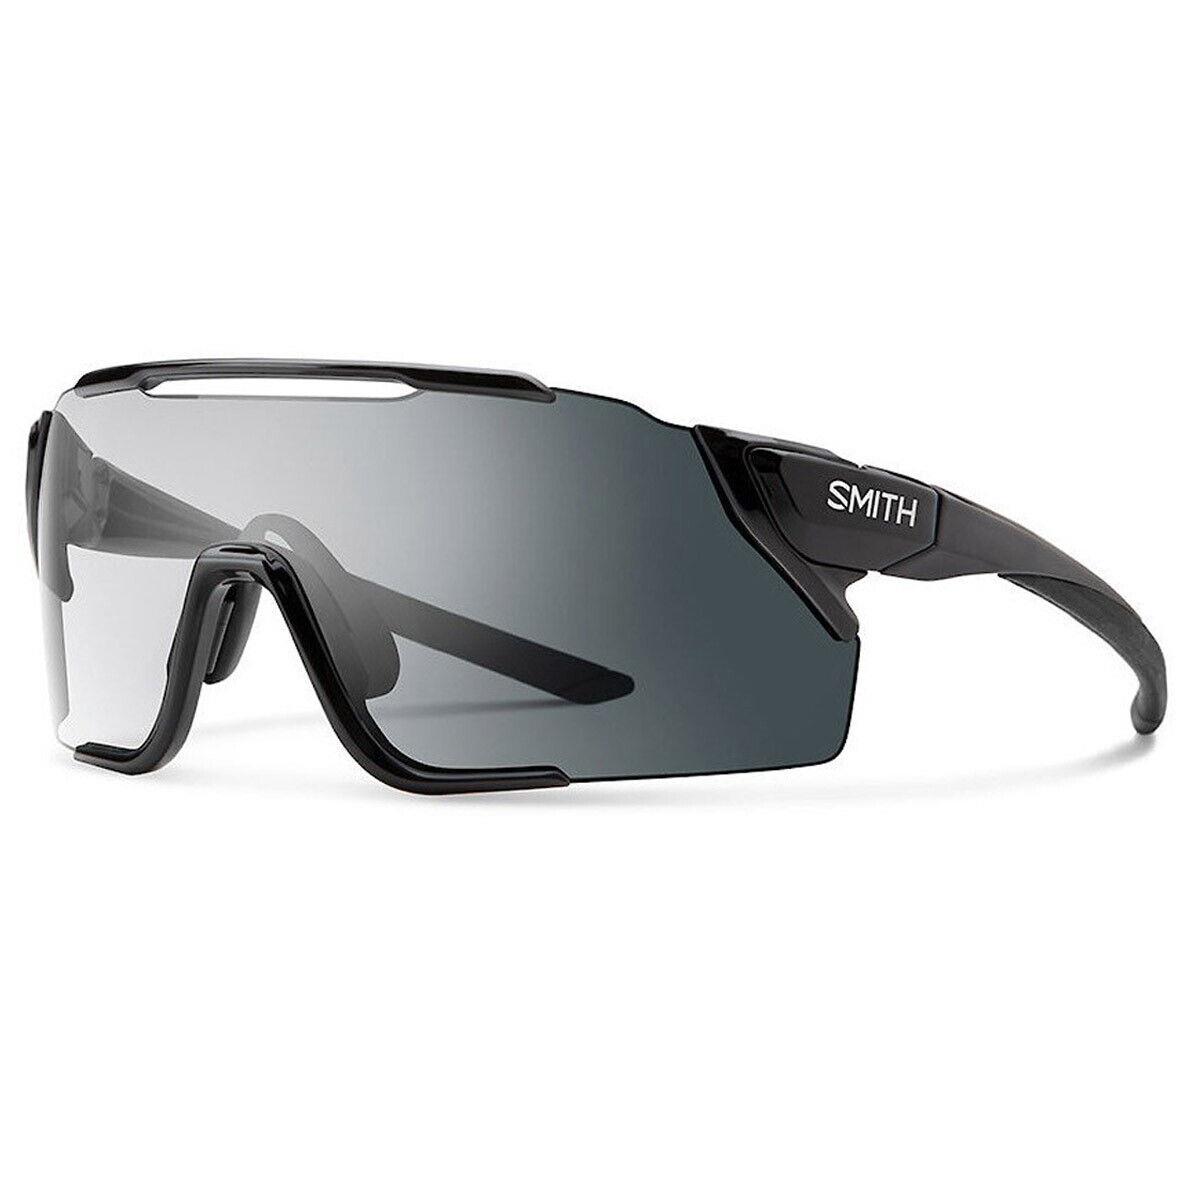 Smith Attack Mag Mtb Sunglasses Black Photochromic Clear to Gray Lens +bonus - Frame: Black, Lens: